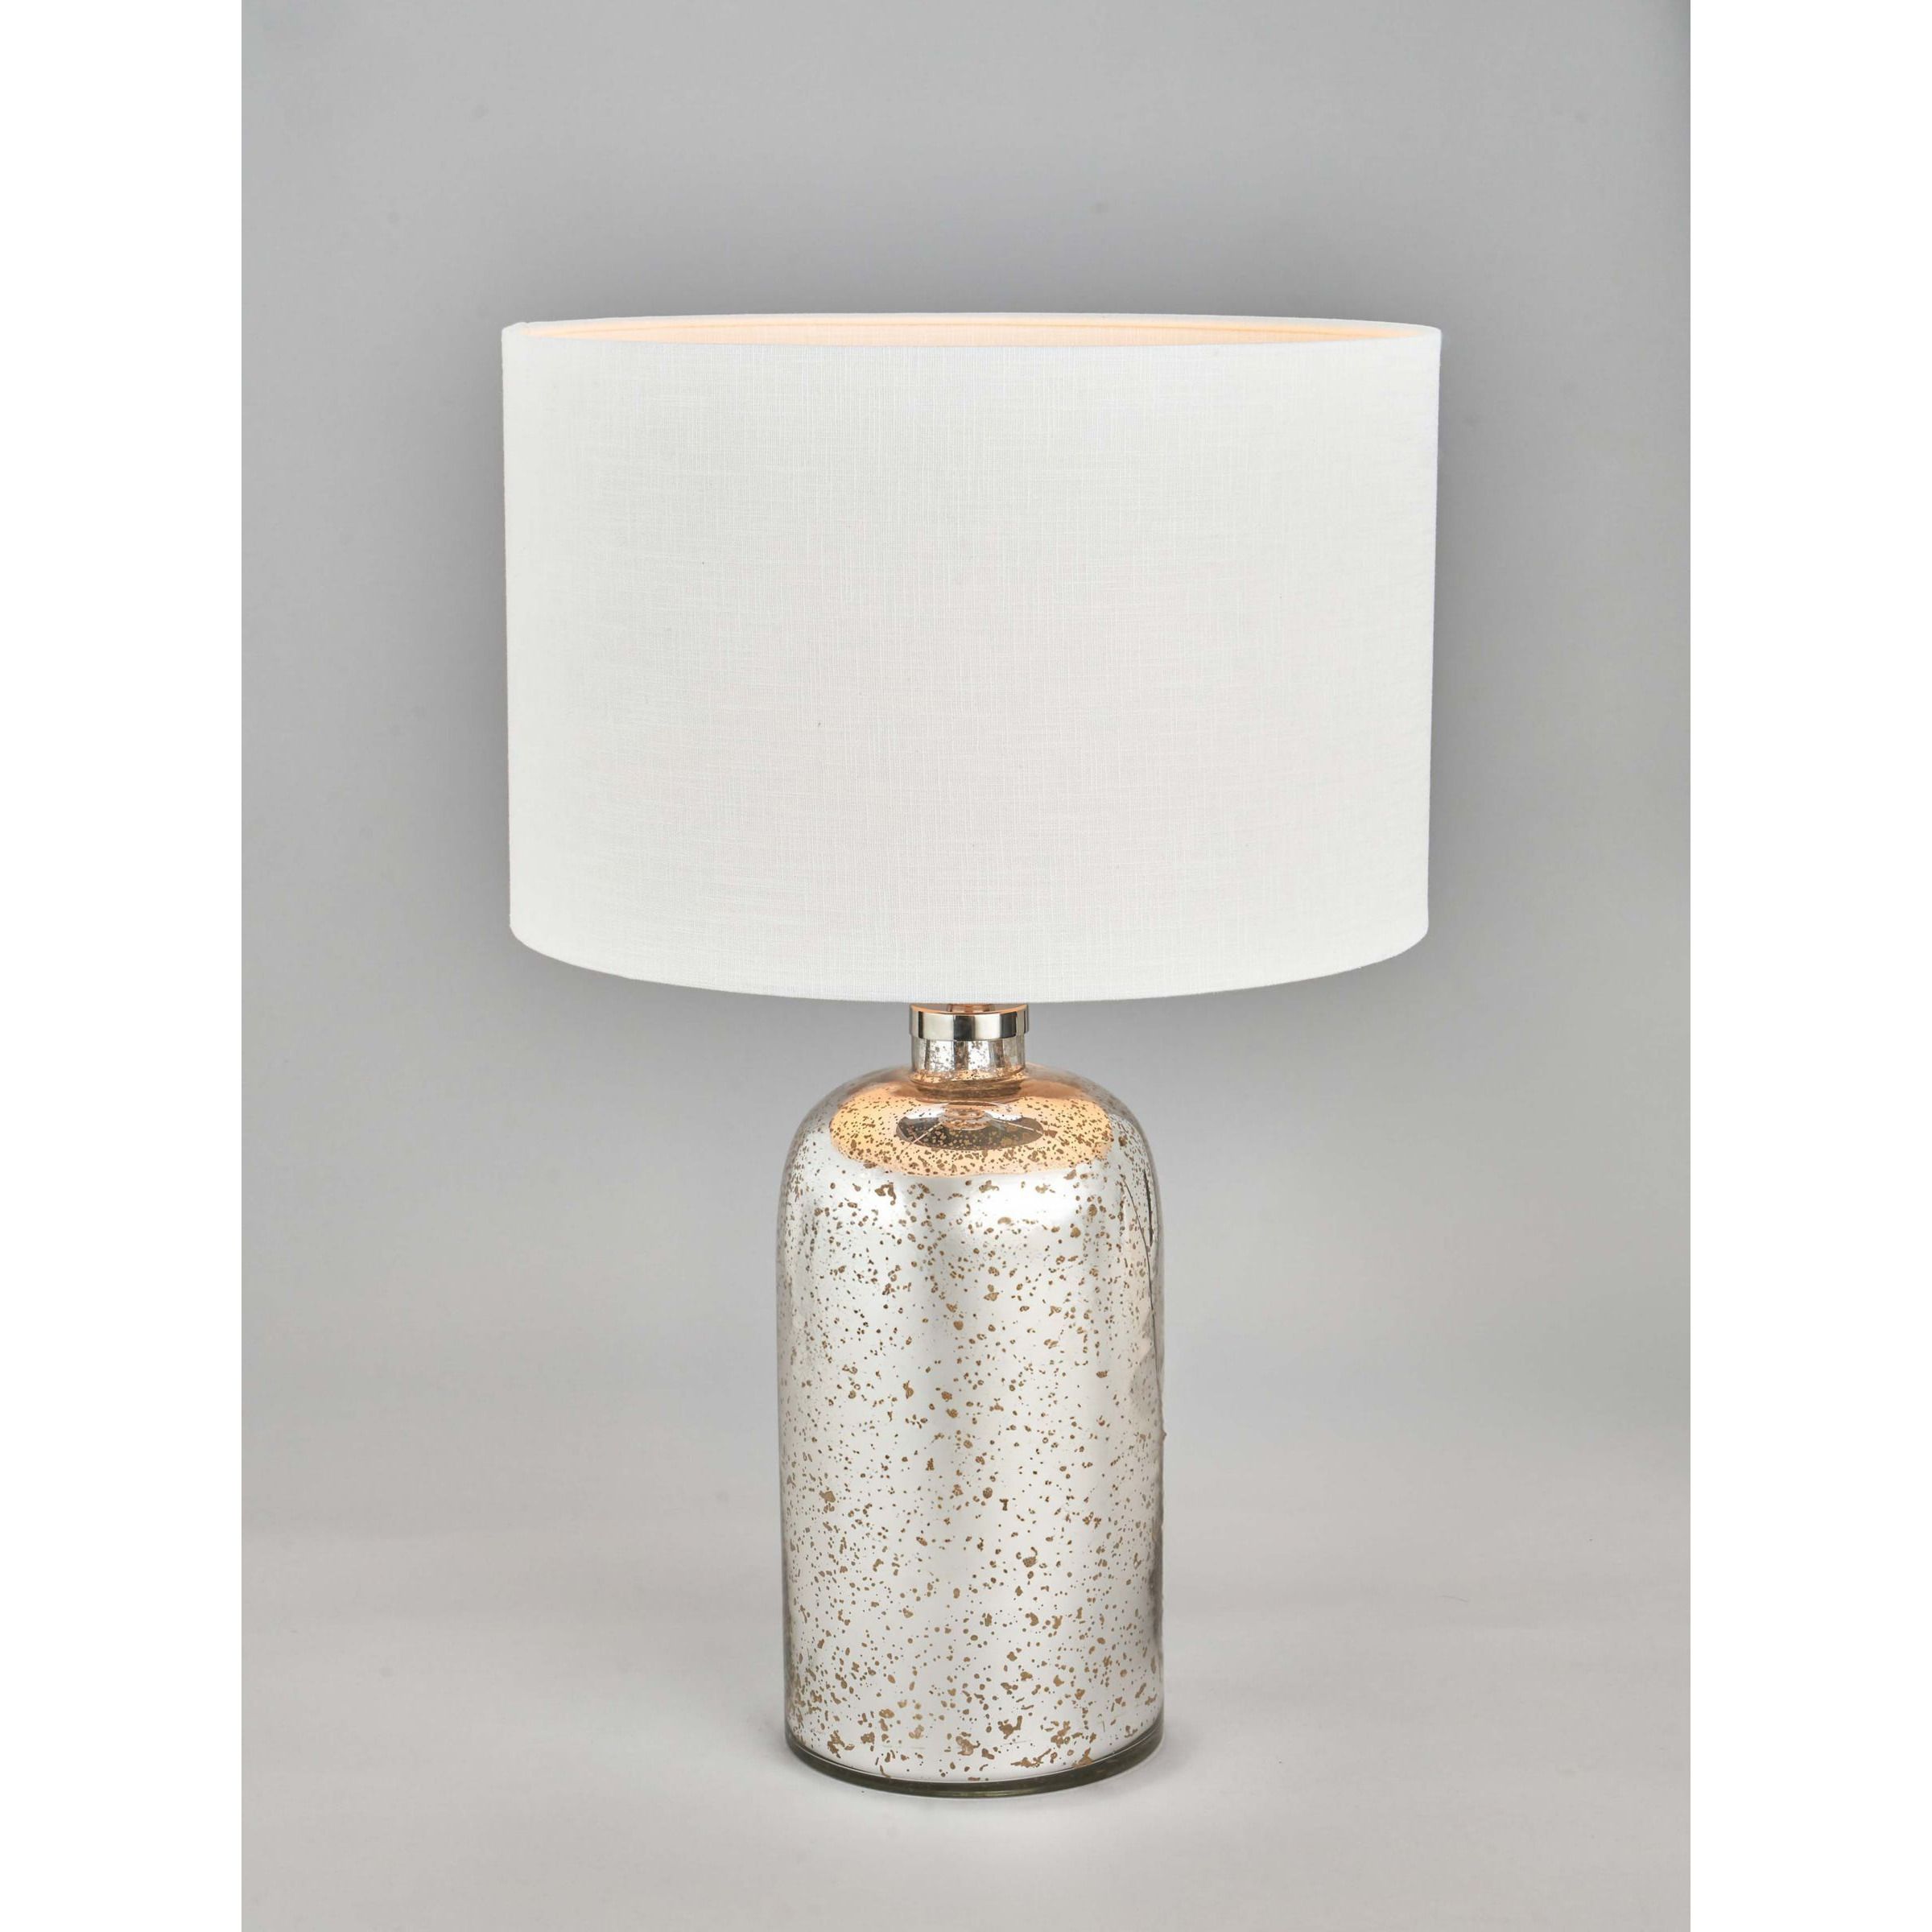 Pacific Lifestyle Ophelia Mercury Glass Table Lamp - image 1